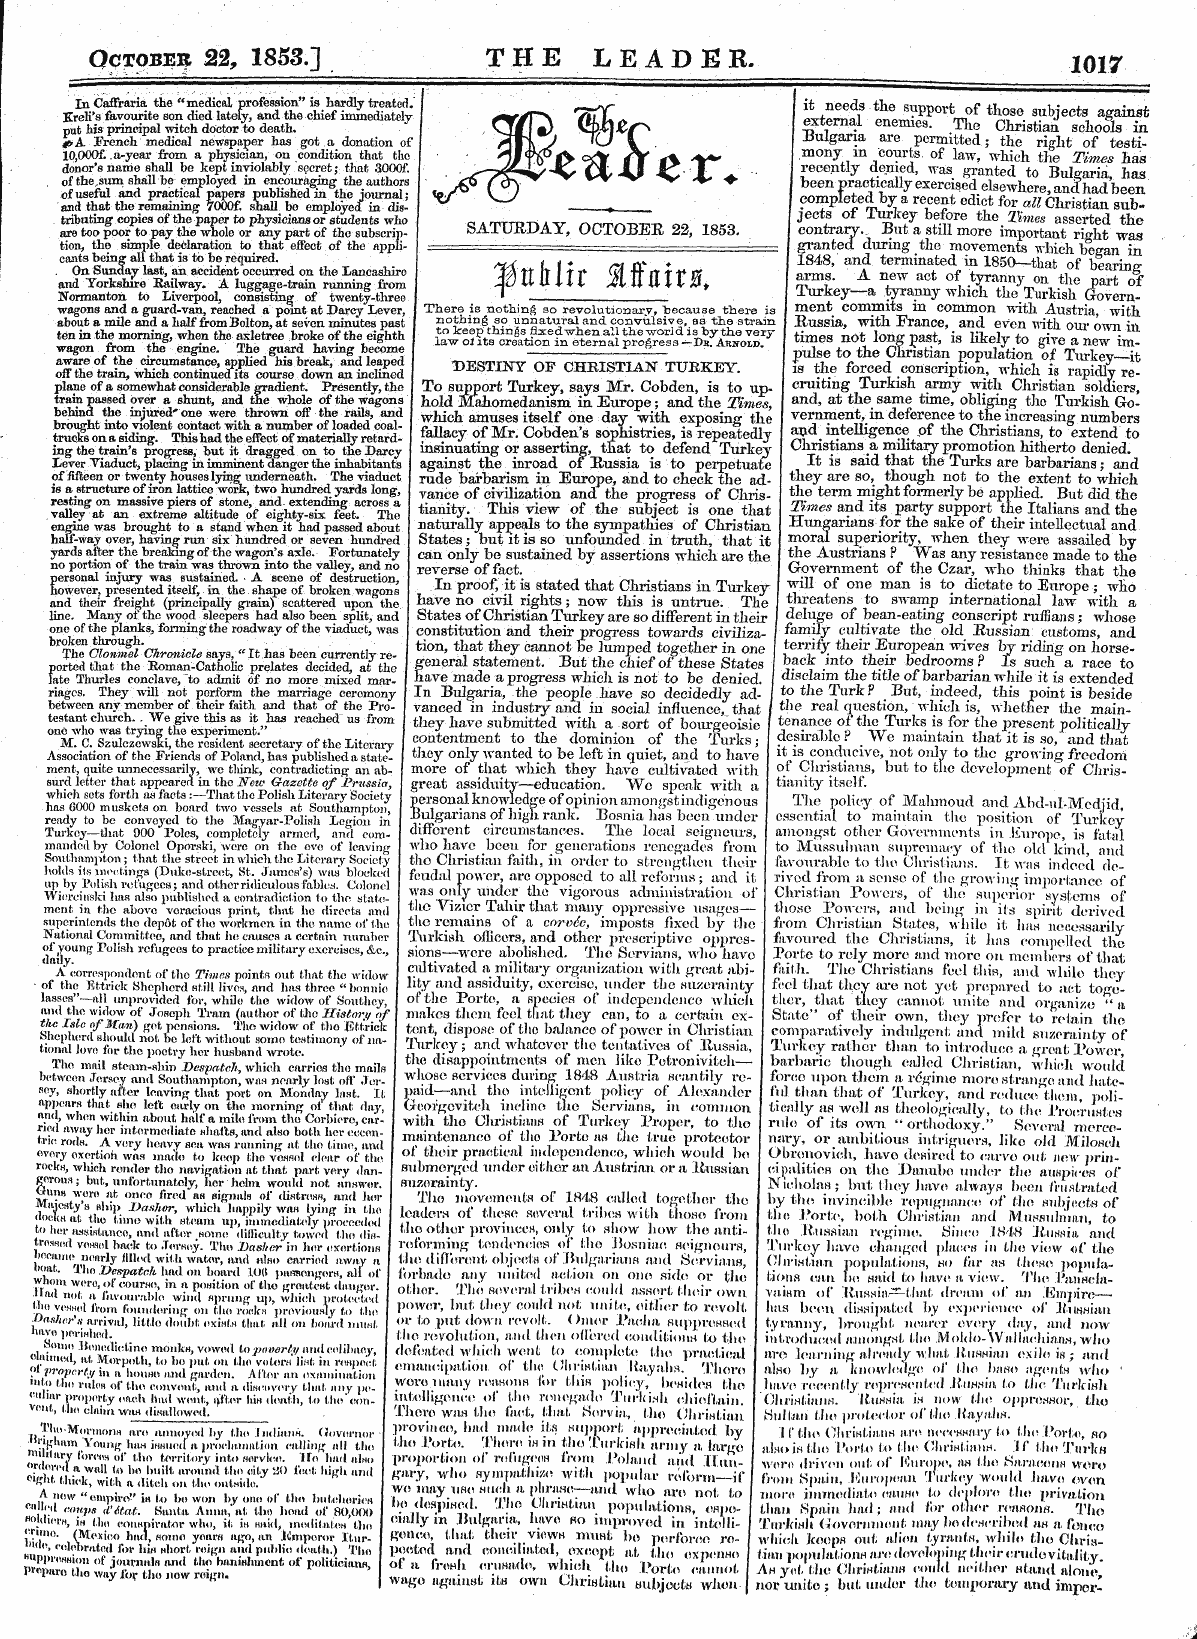 Leader (1850-1860): jS F Y, Country edition - Saturday, October 22, 1853.